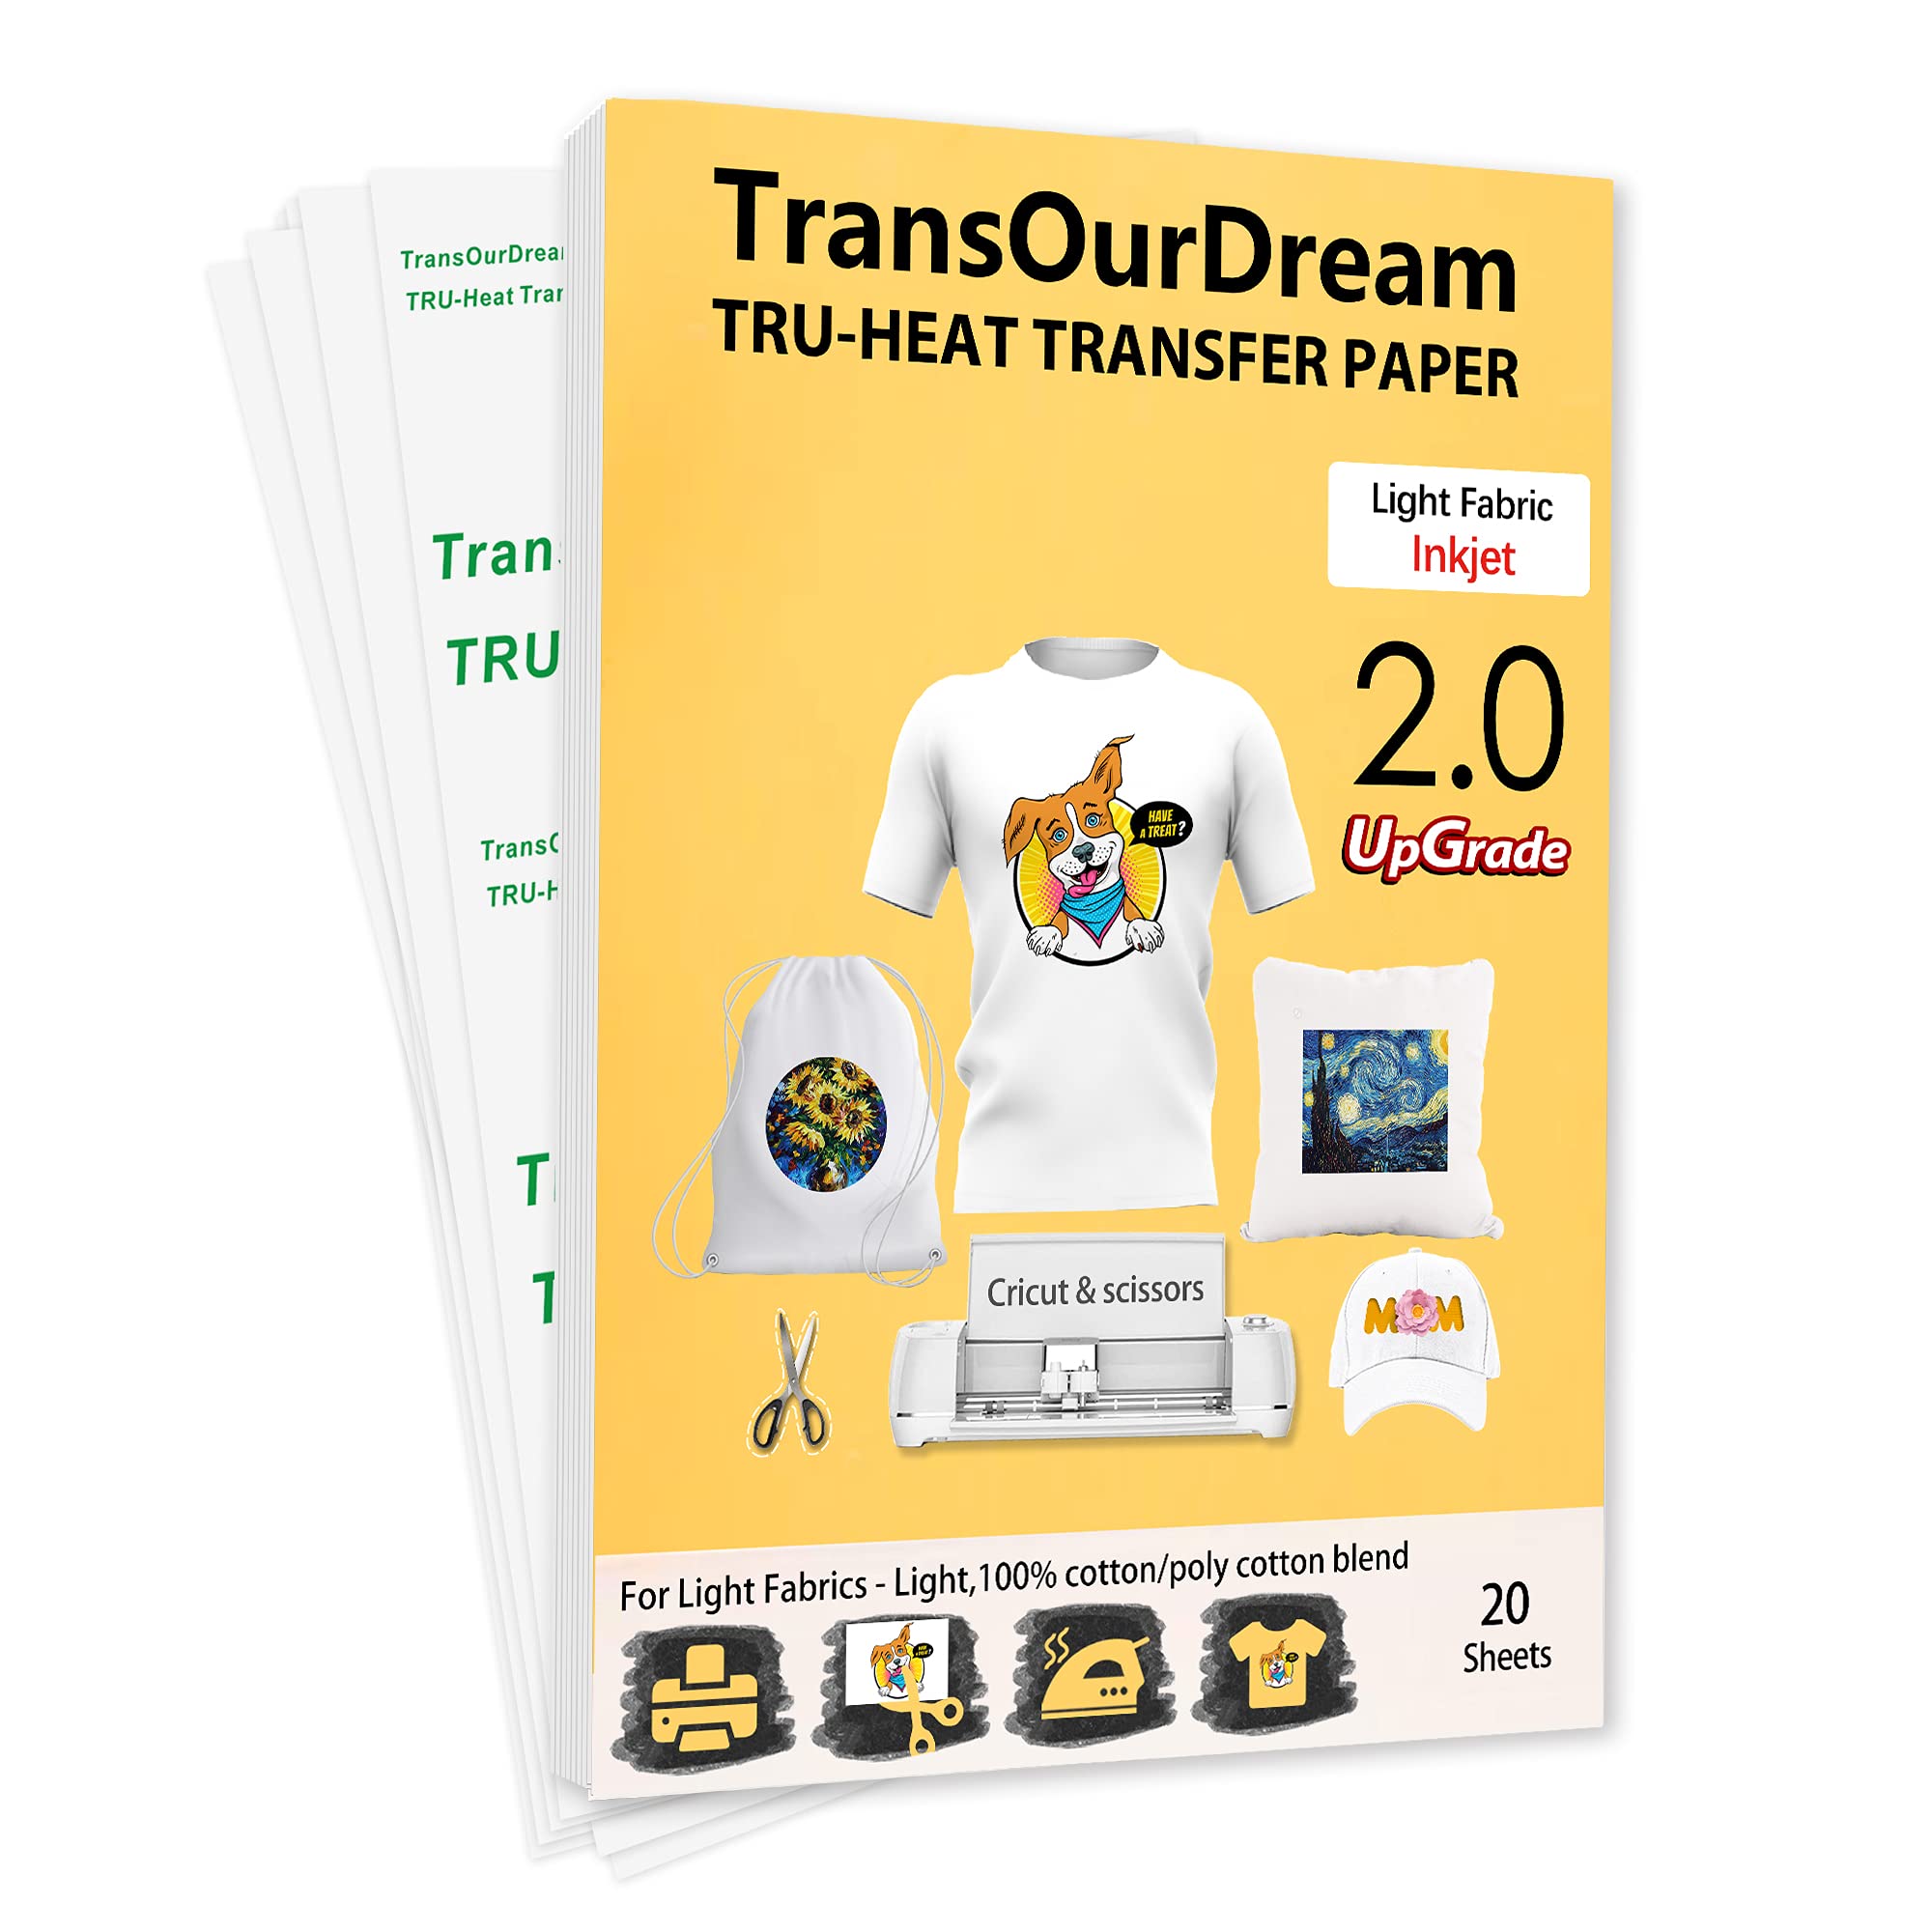 Heat Transfer Paper Tutorial - (Light and Dark Transfer Paper) for Garment  Printing 